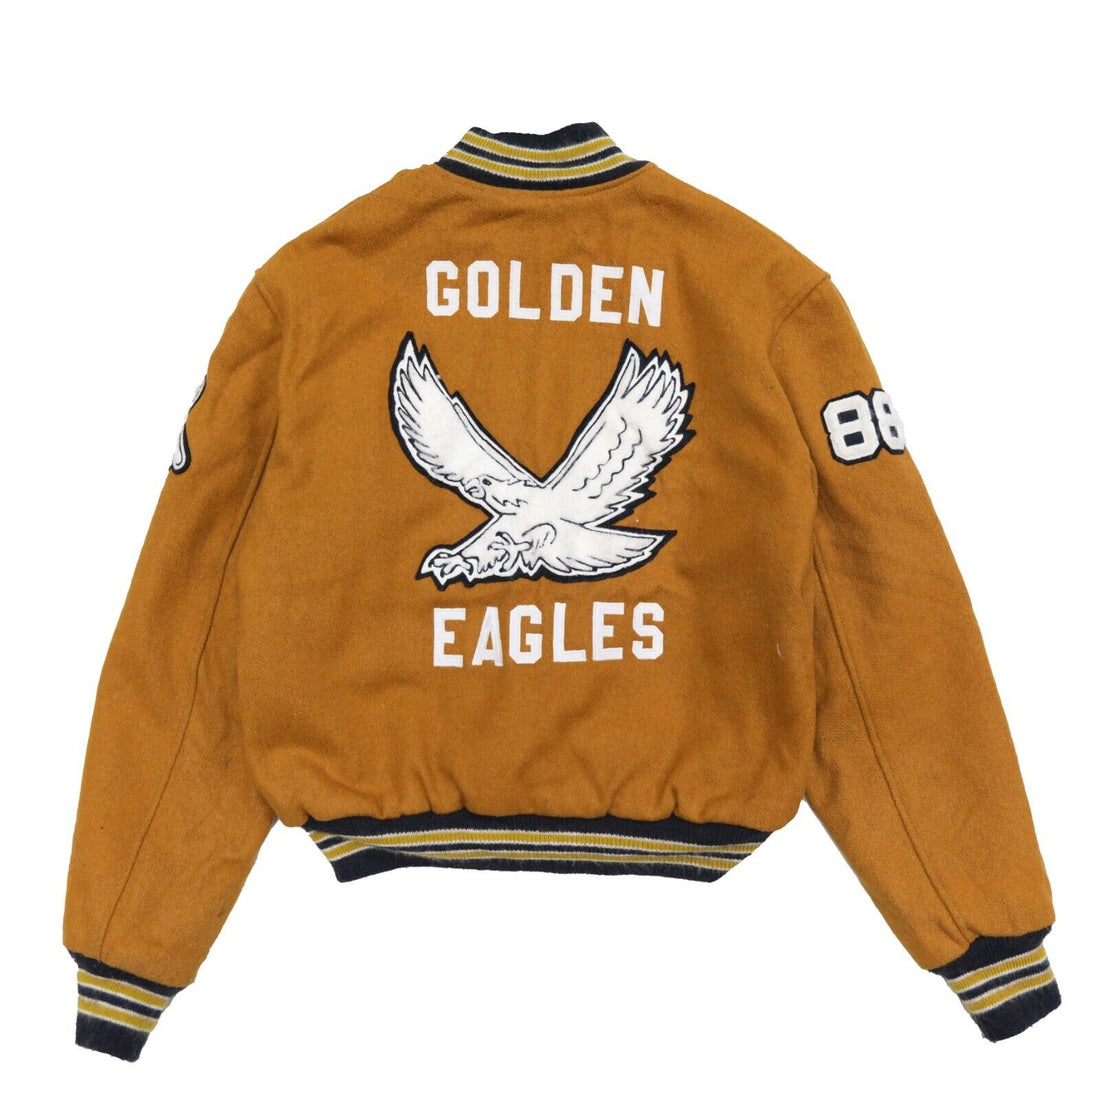 Vintage Staunton River Golden Eagles Wool Varsity Jacket Size Large Tan 80s